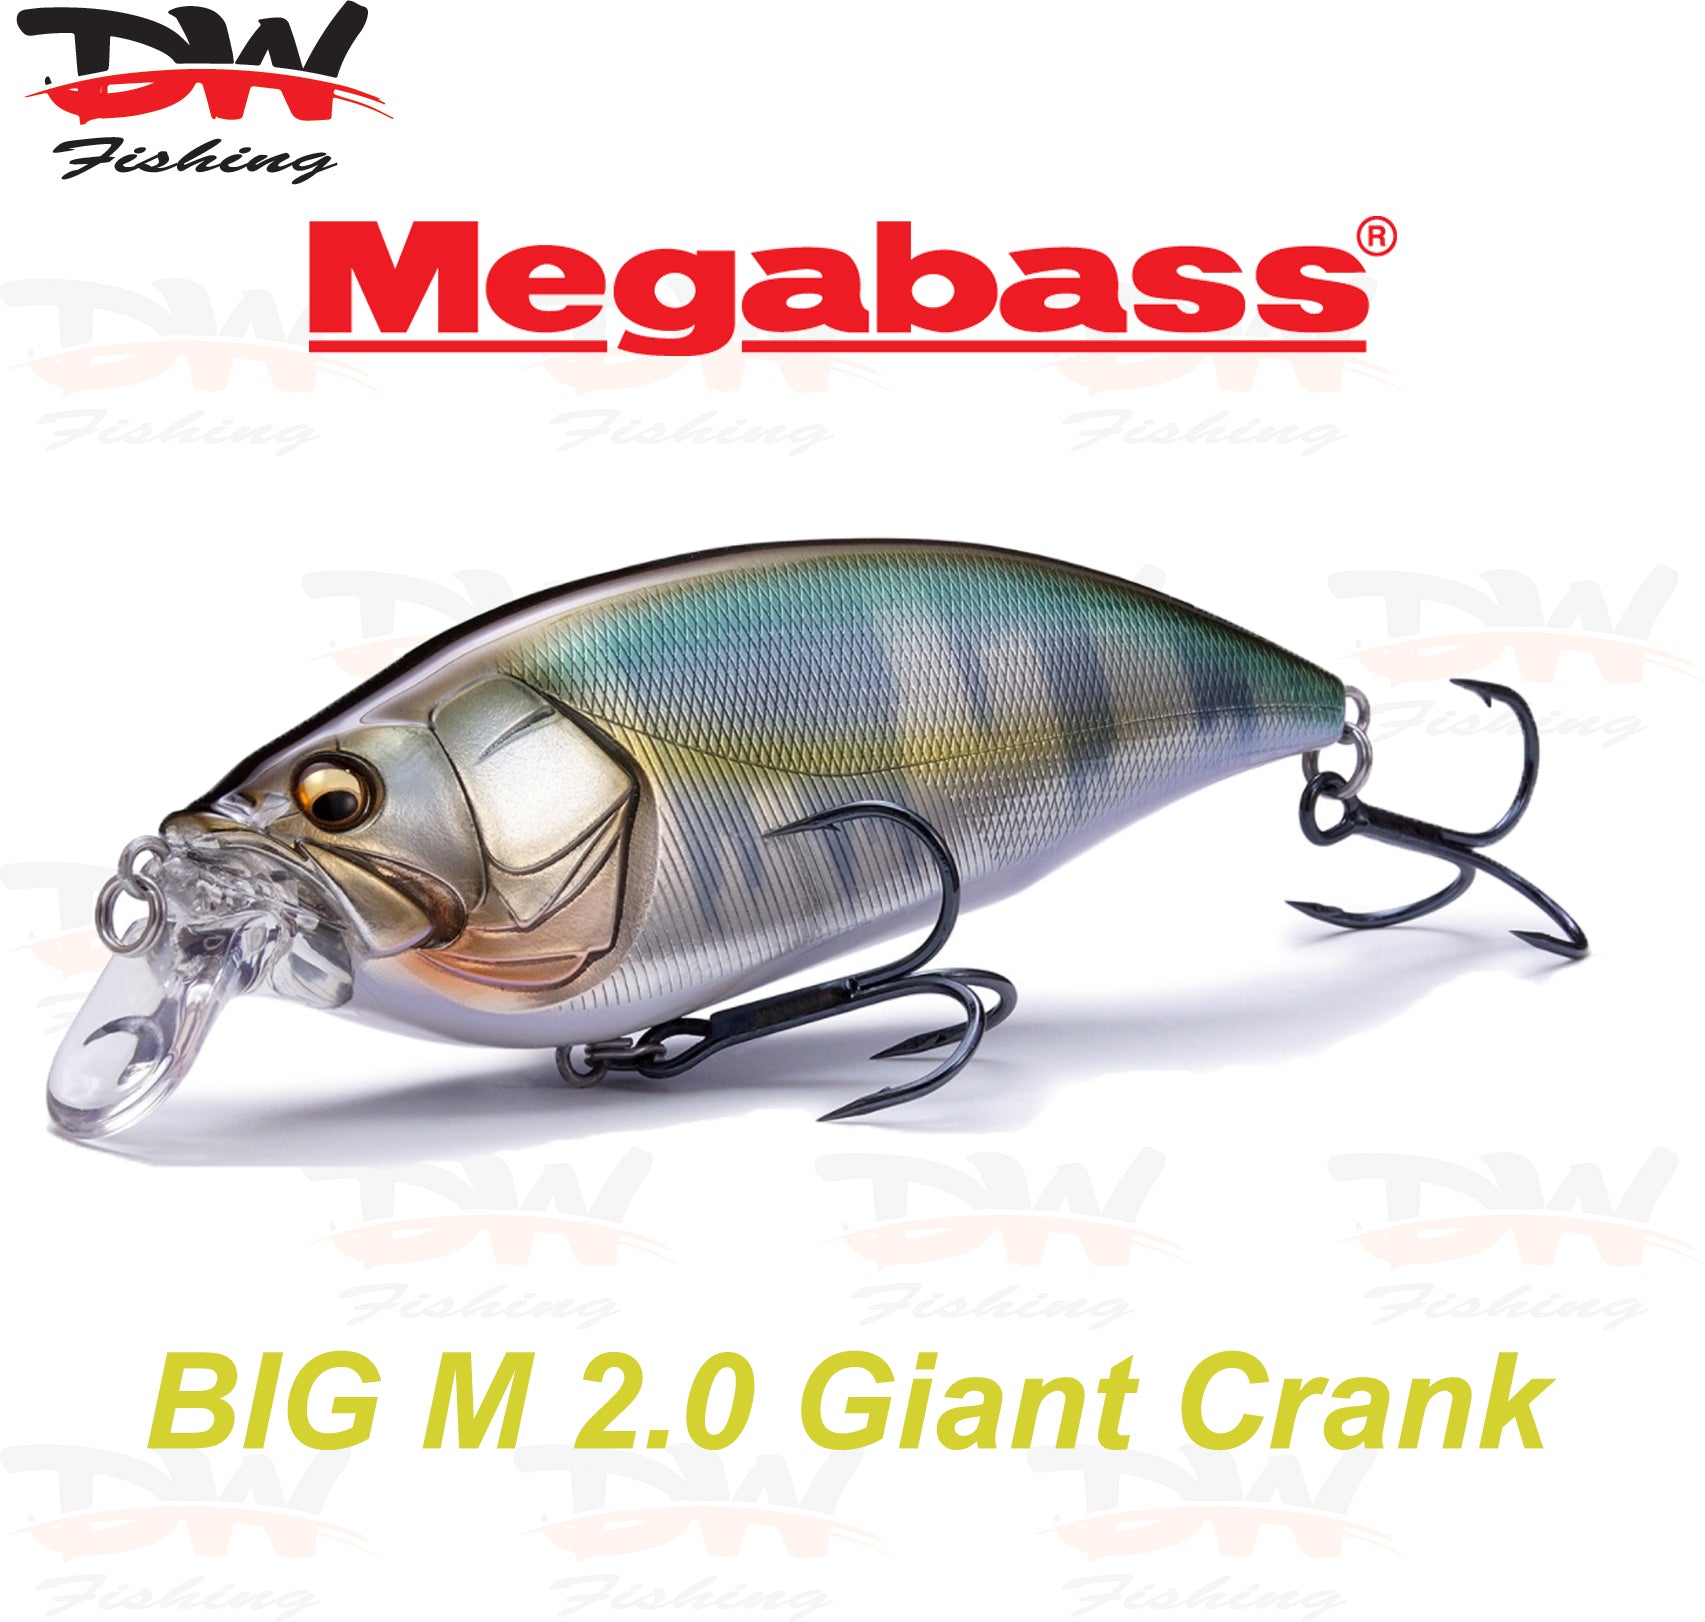 Megabass Big M 2.0 Giant Crank 126mm Lure